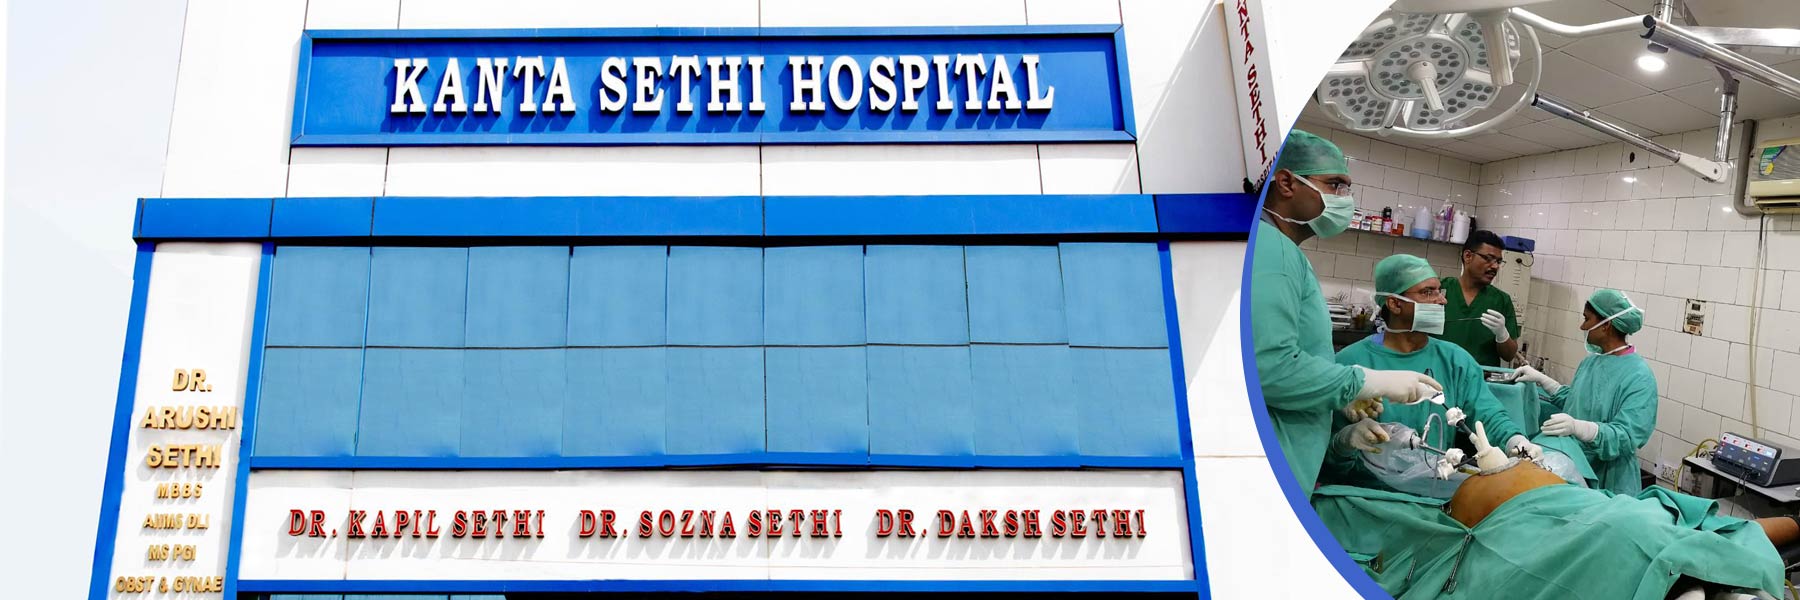 Kanta Sethi Hostital Rohini Hospitals 005